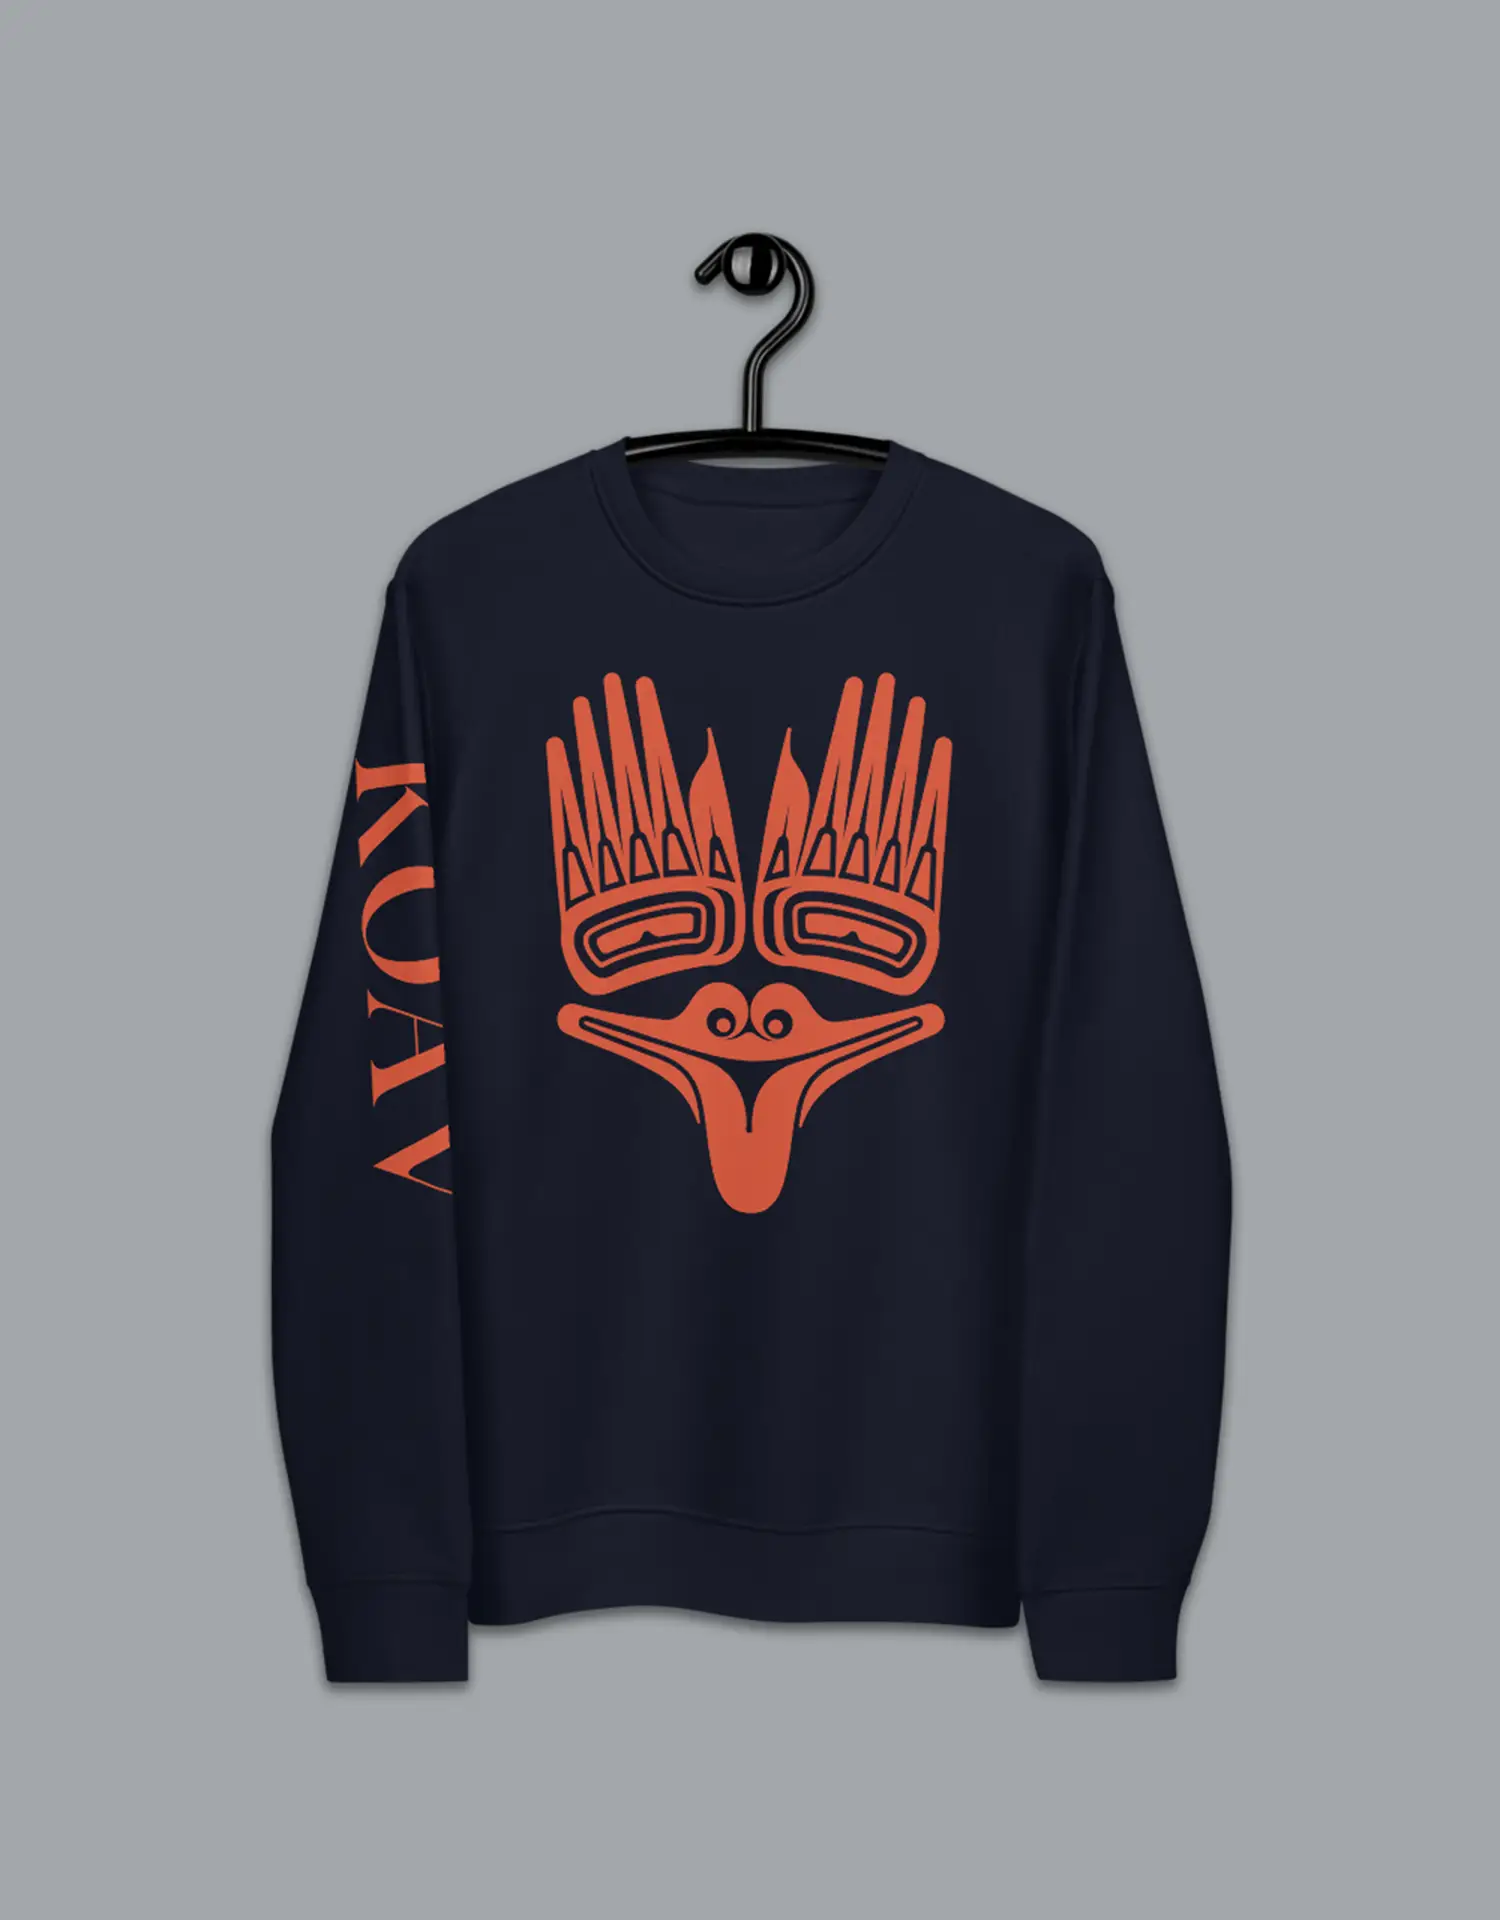 Flow Tribe Premium Eco-friendly Sweatshirt by KOAV